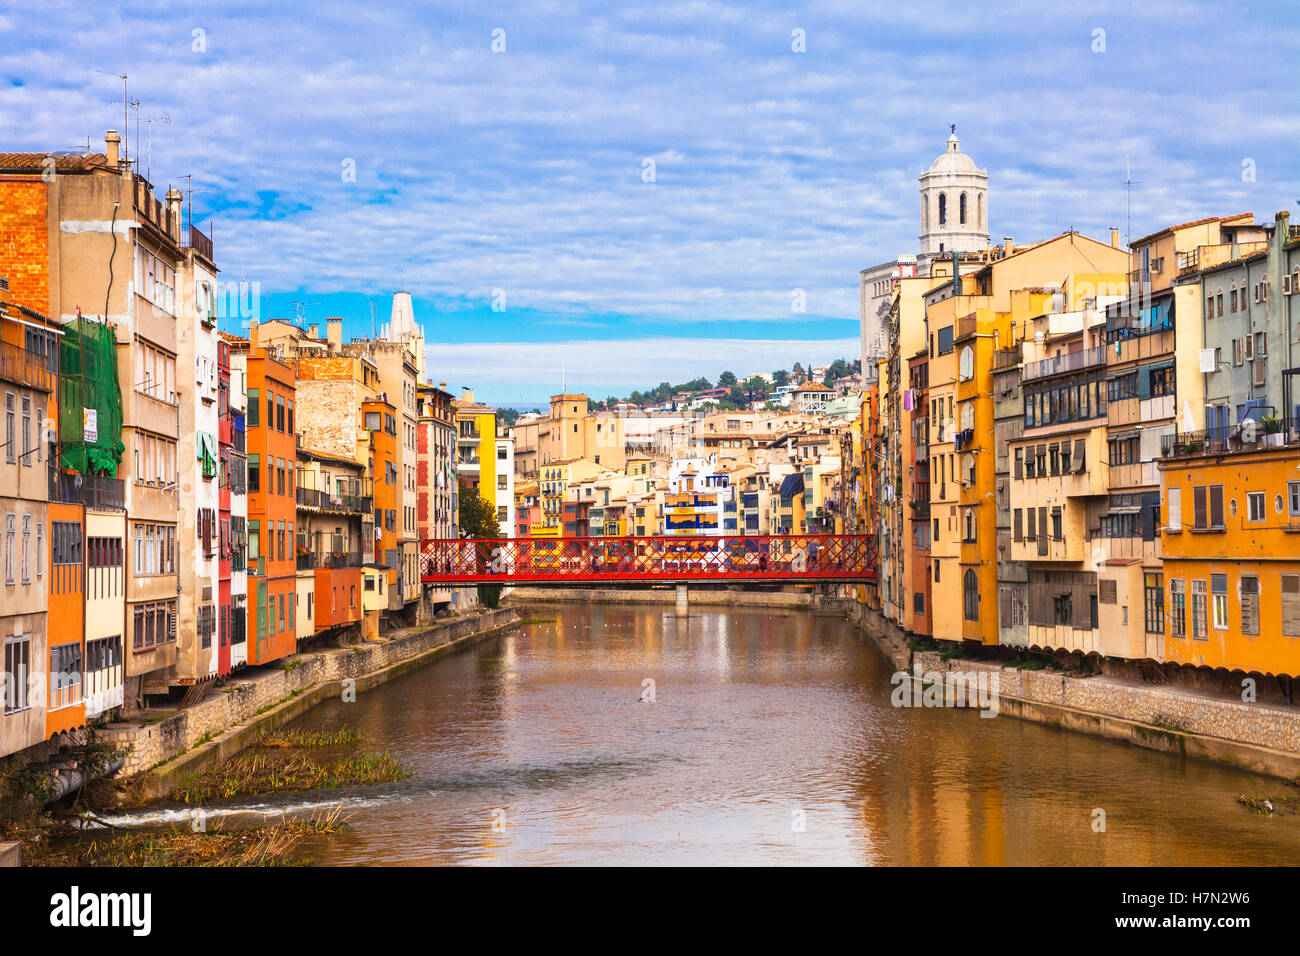 Girona - beautiful colorful town in Catalonia, Spain Stock Photo